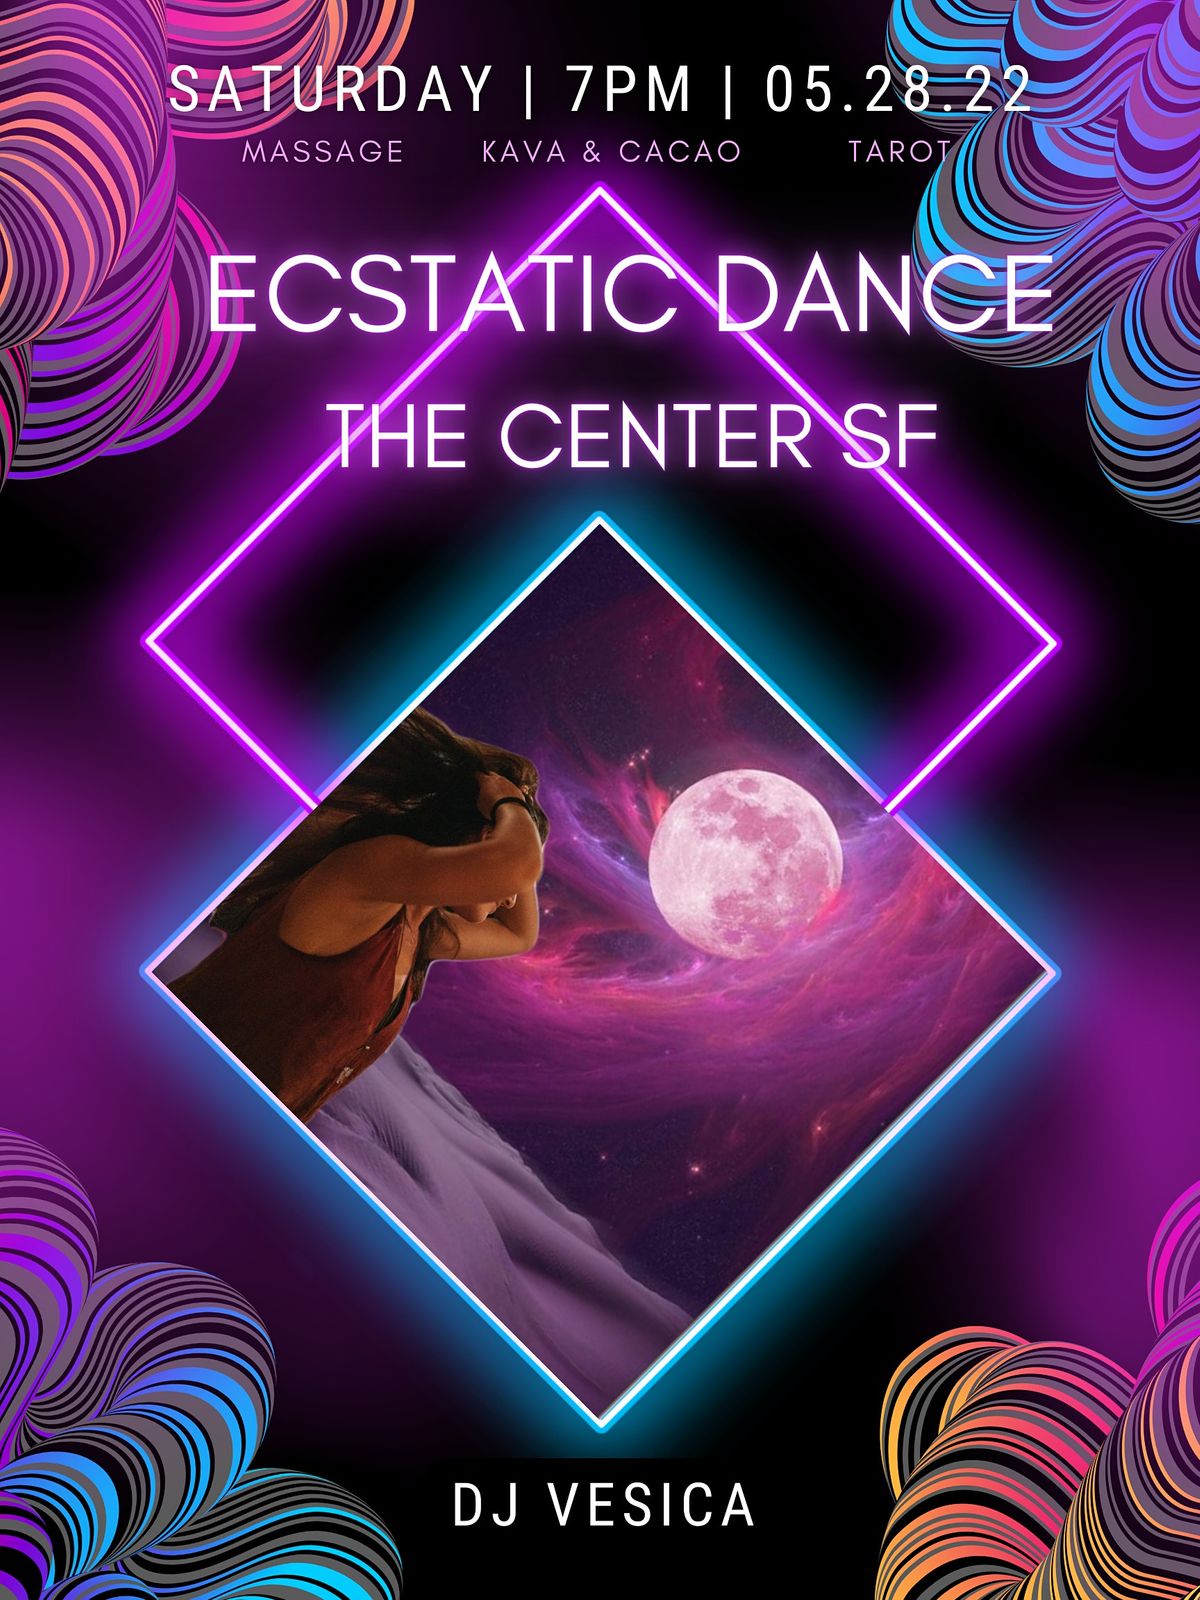 ECSTATIC DANCE WITH DJ VESICA